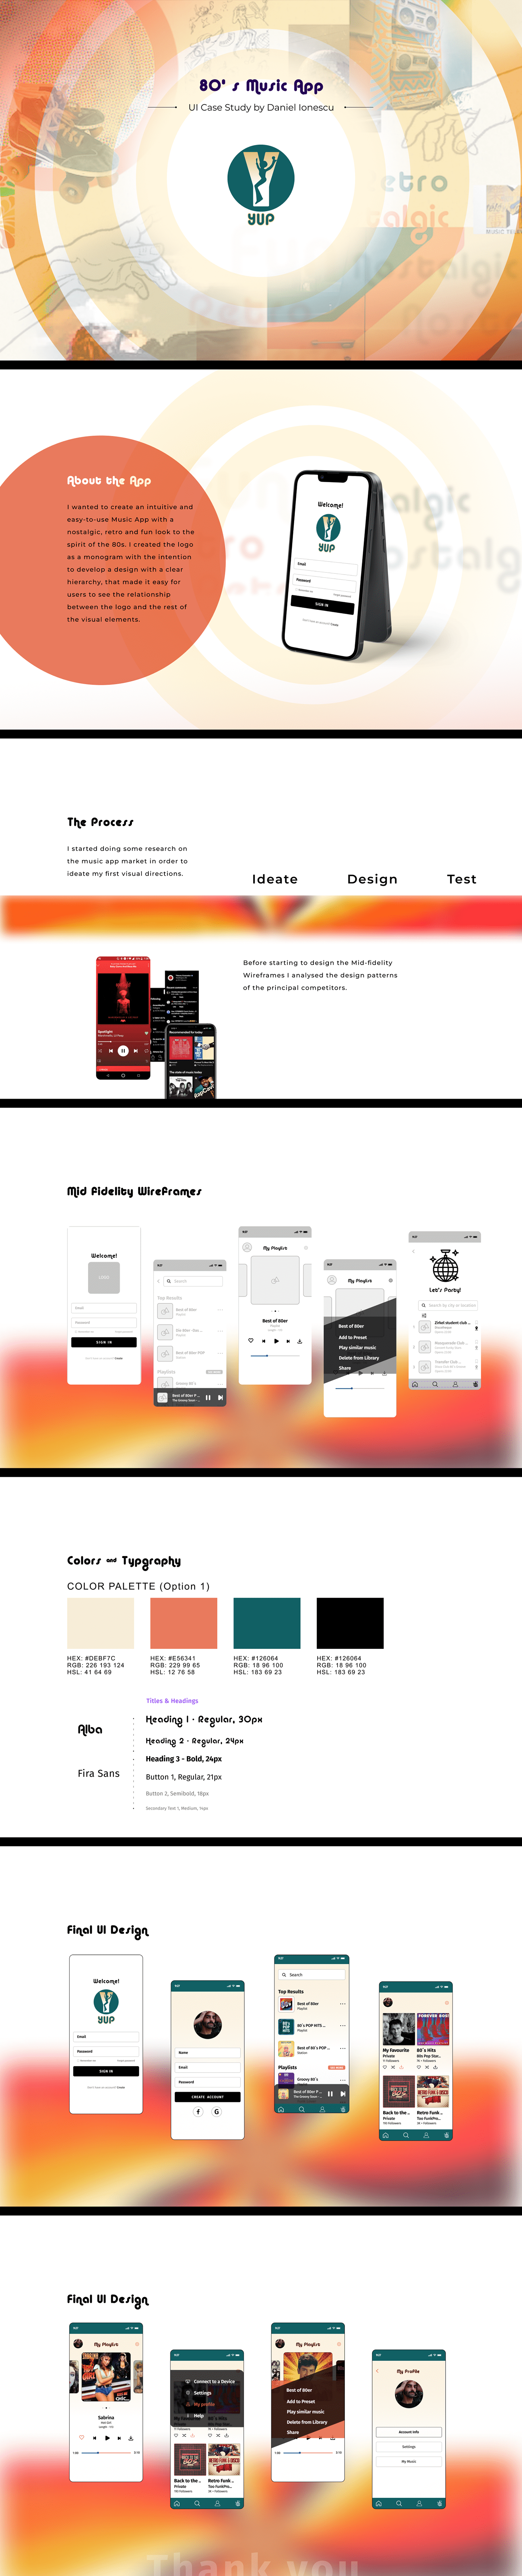 Figma Mobile app Project UI/UX